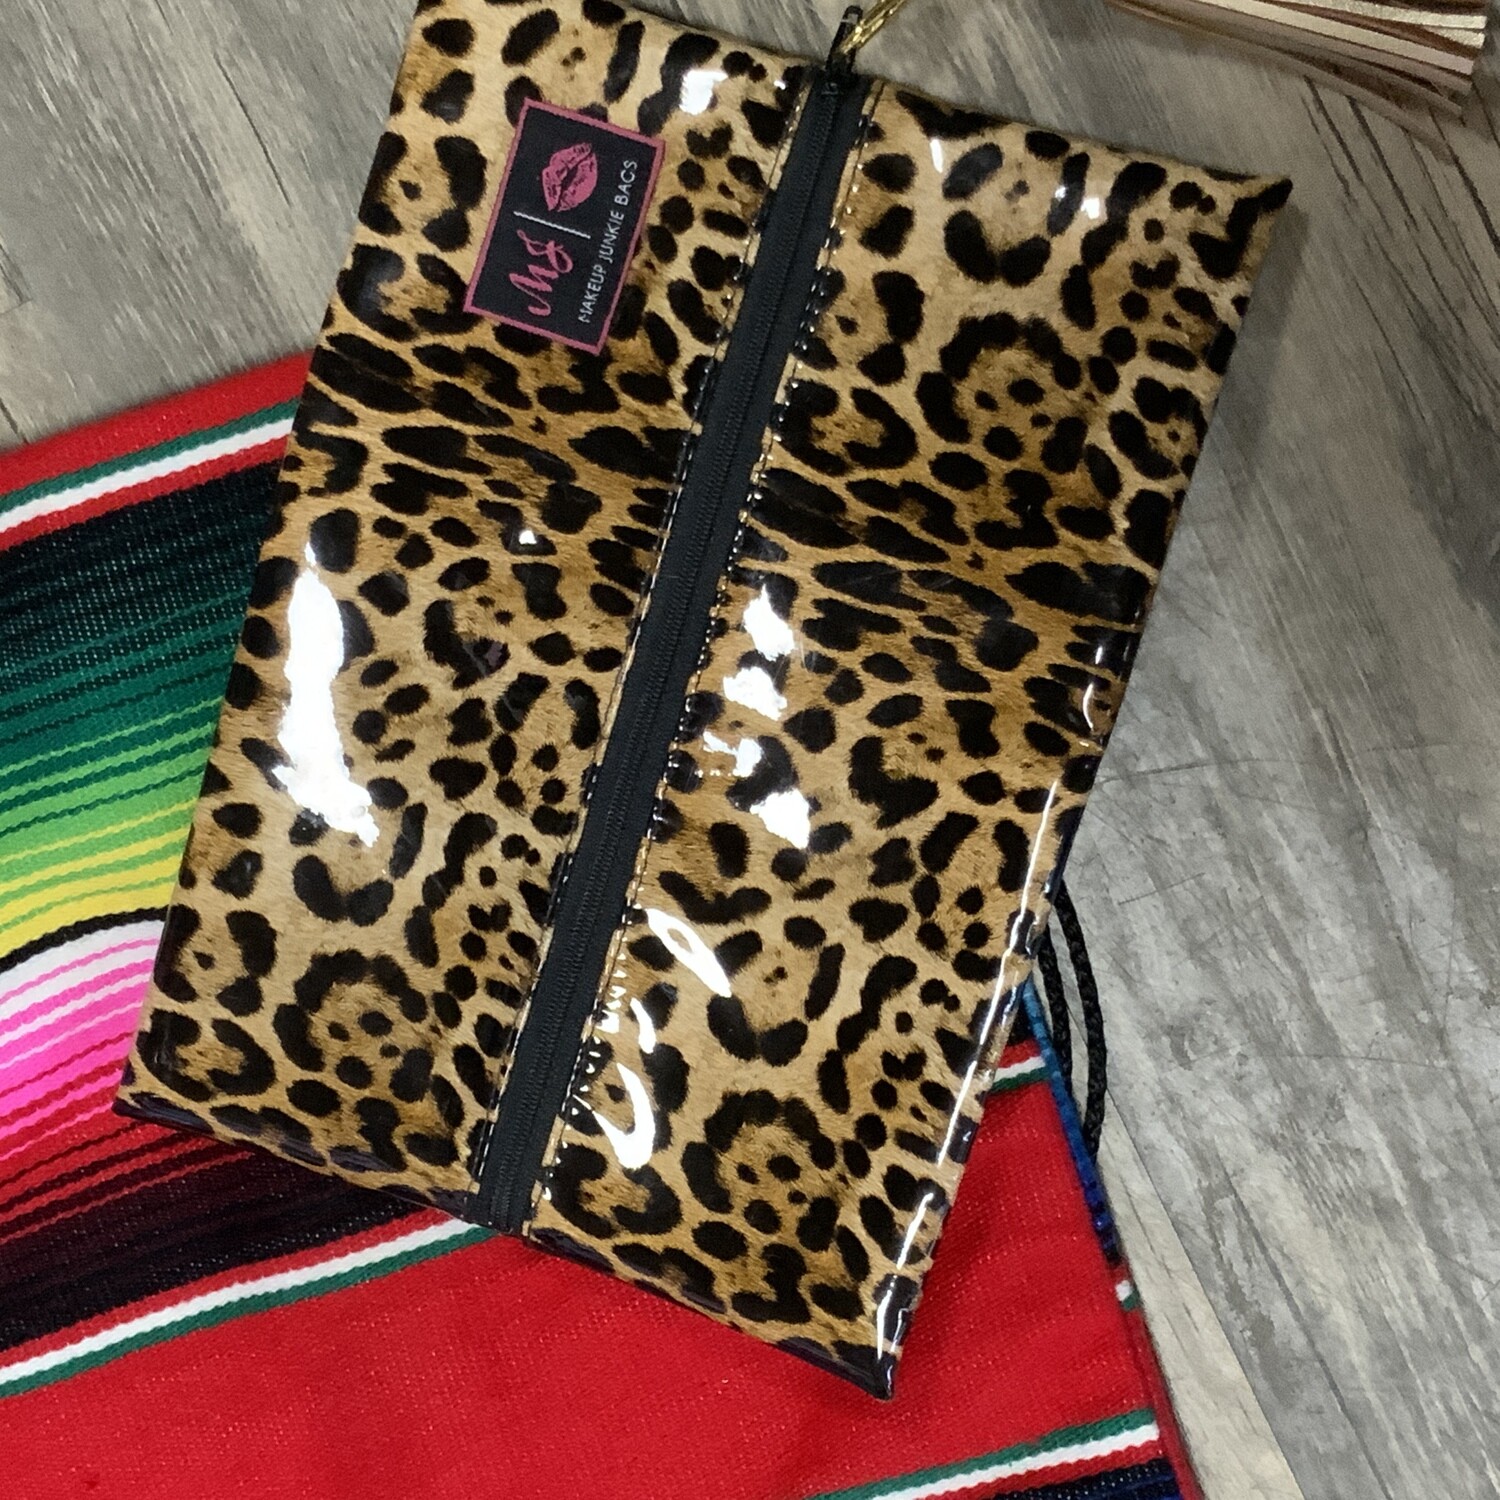 Make Up Junkie Bags Large Size - Leopard